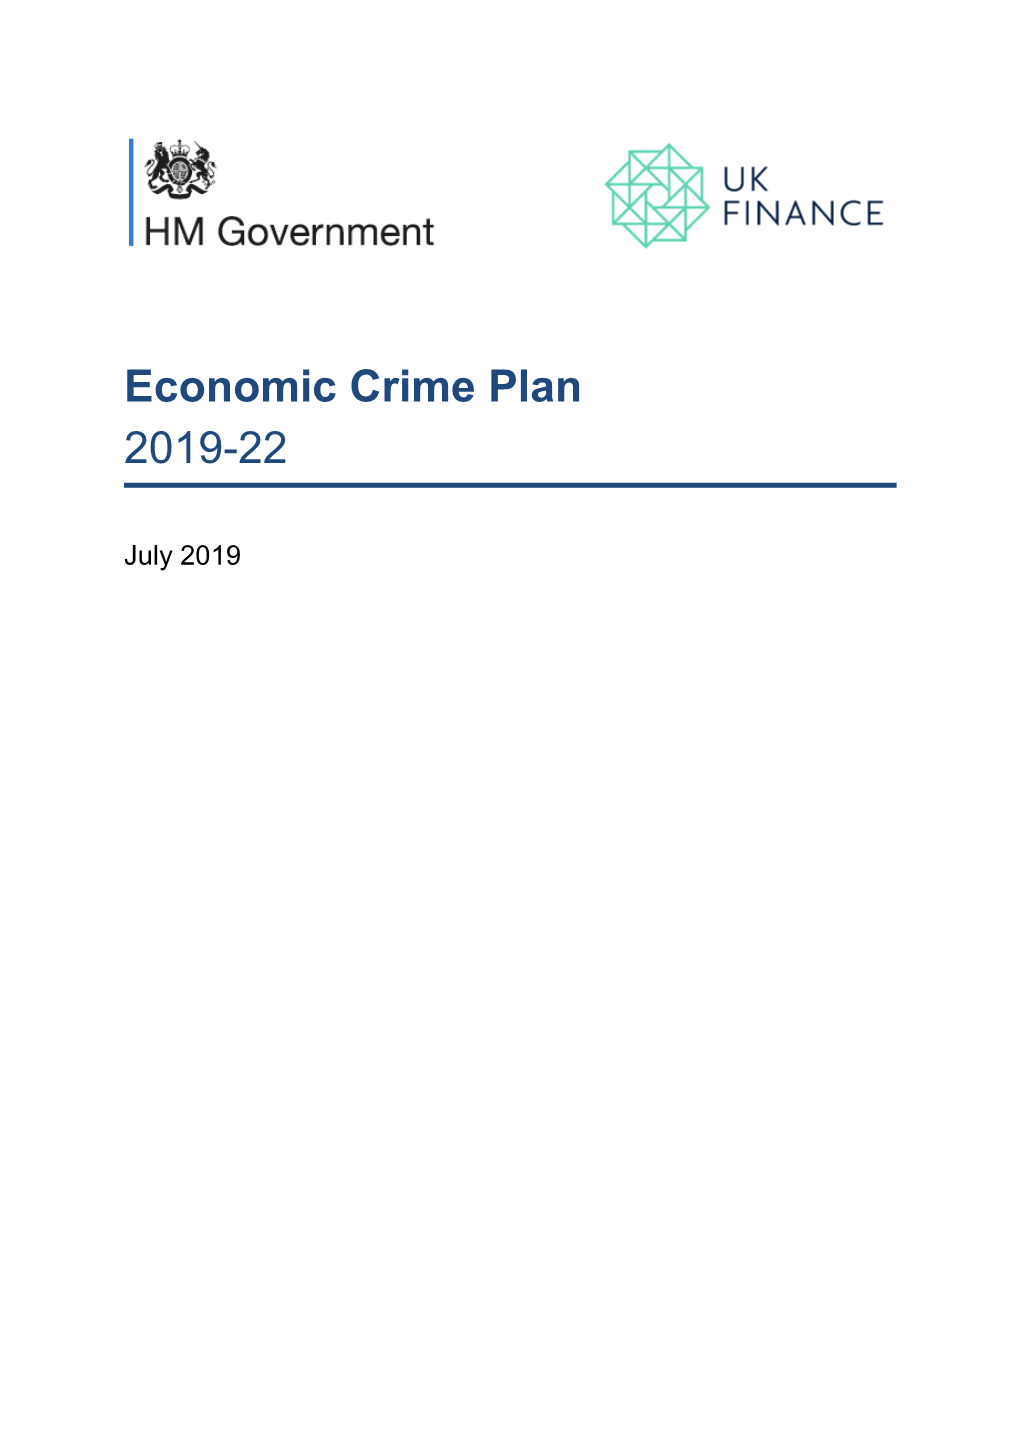 Economic Crime Plan 2019-22